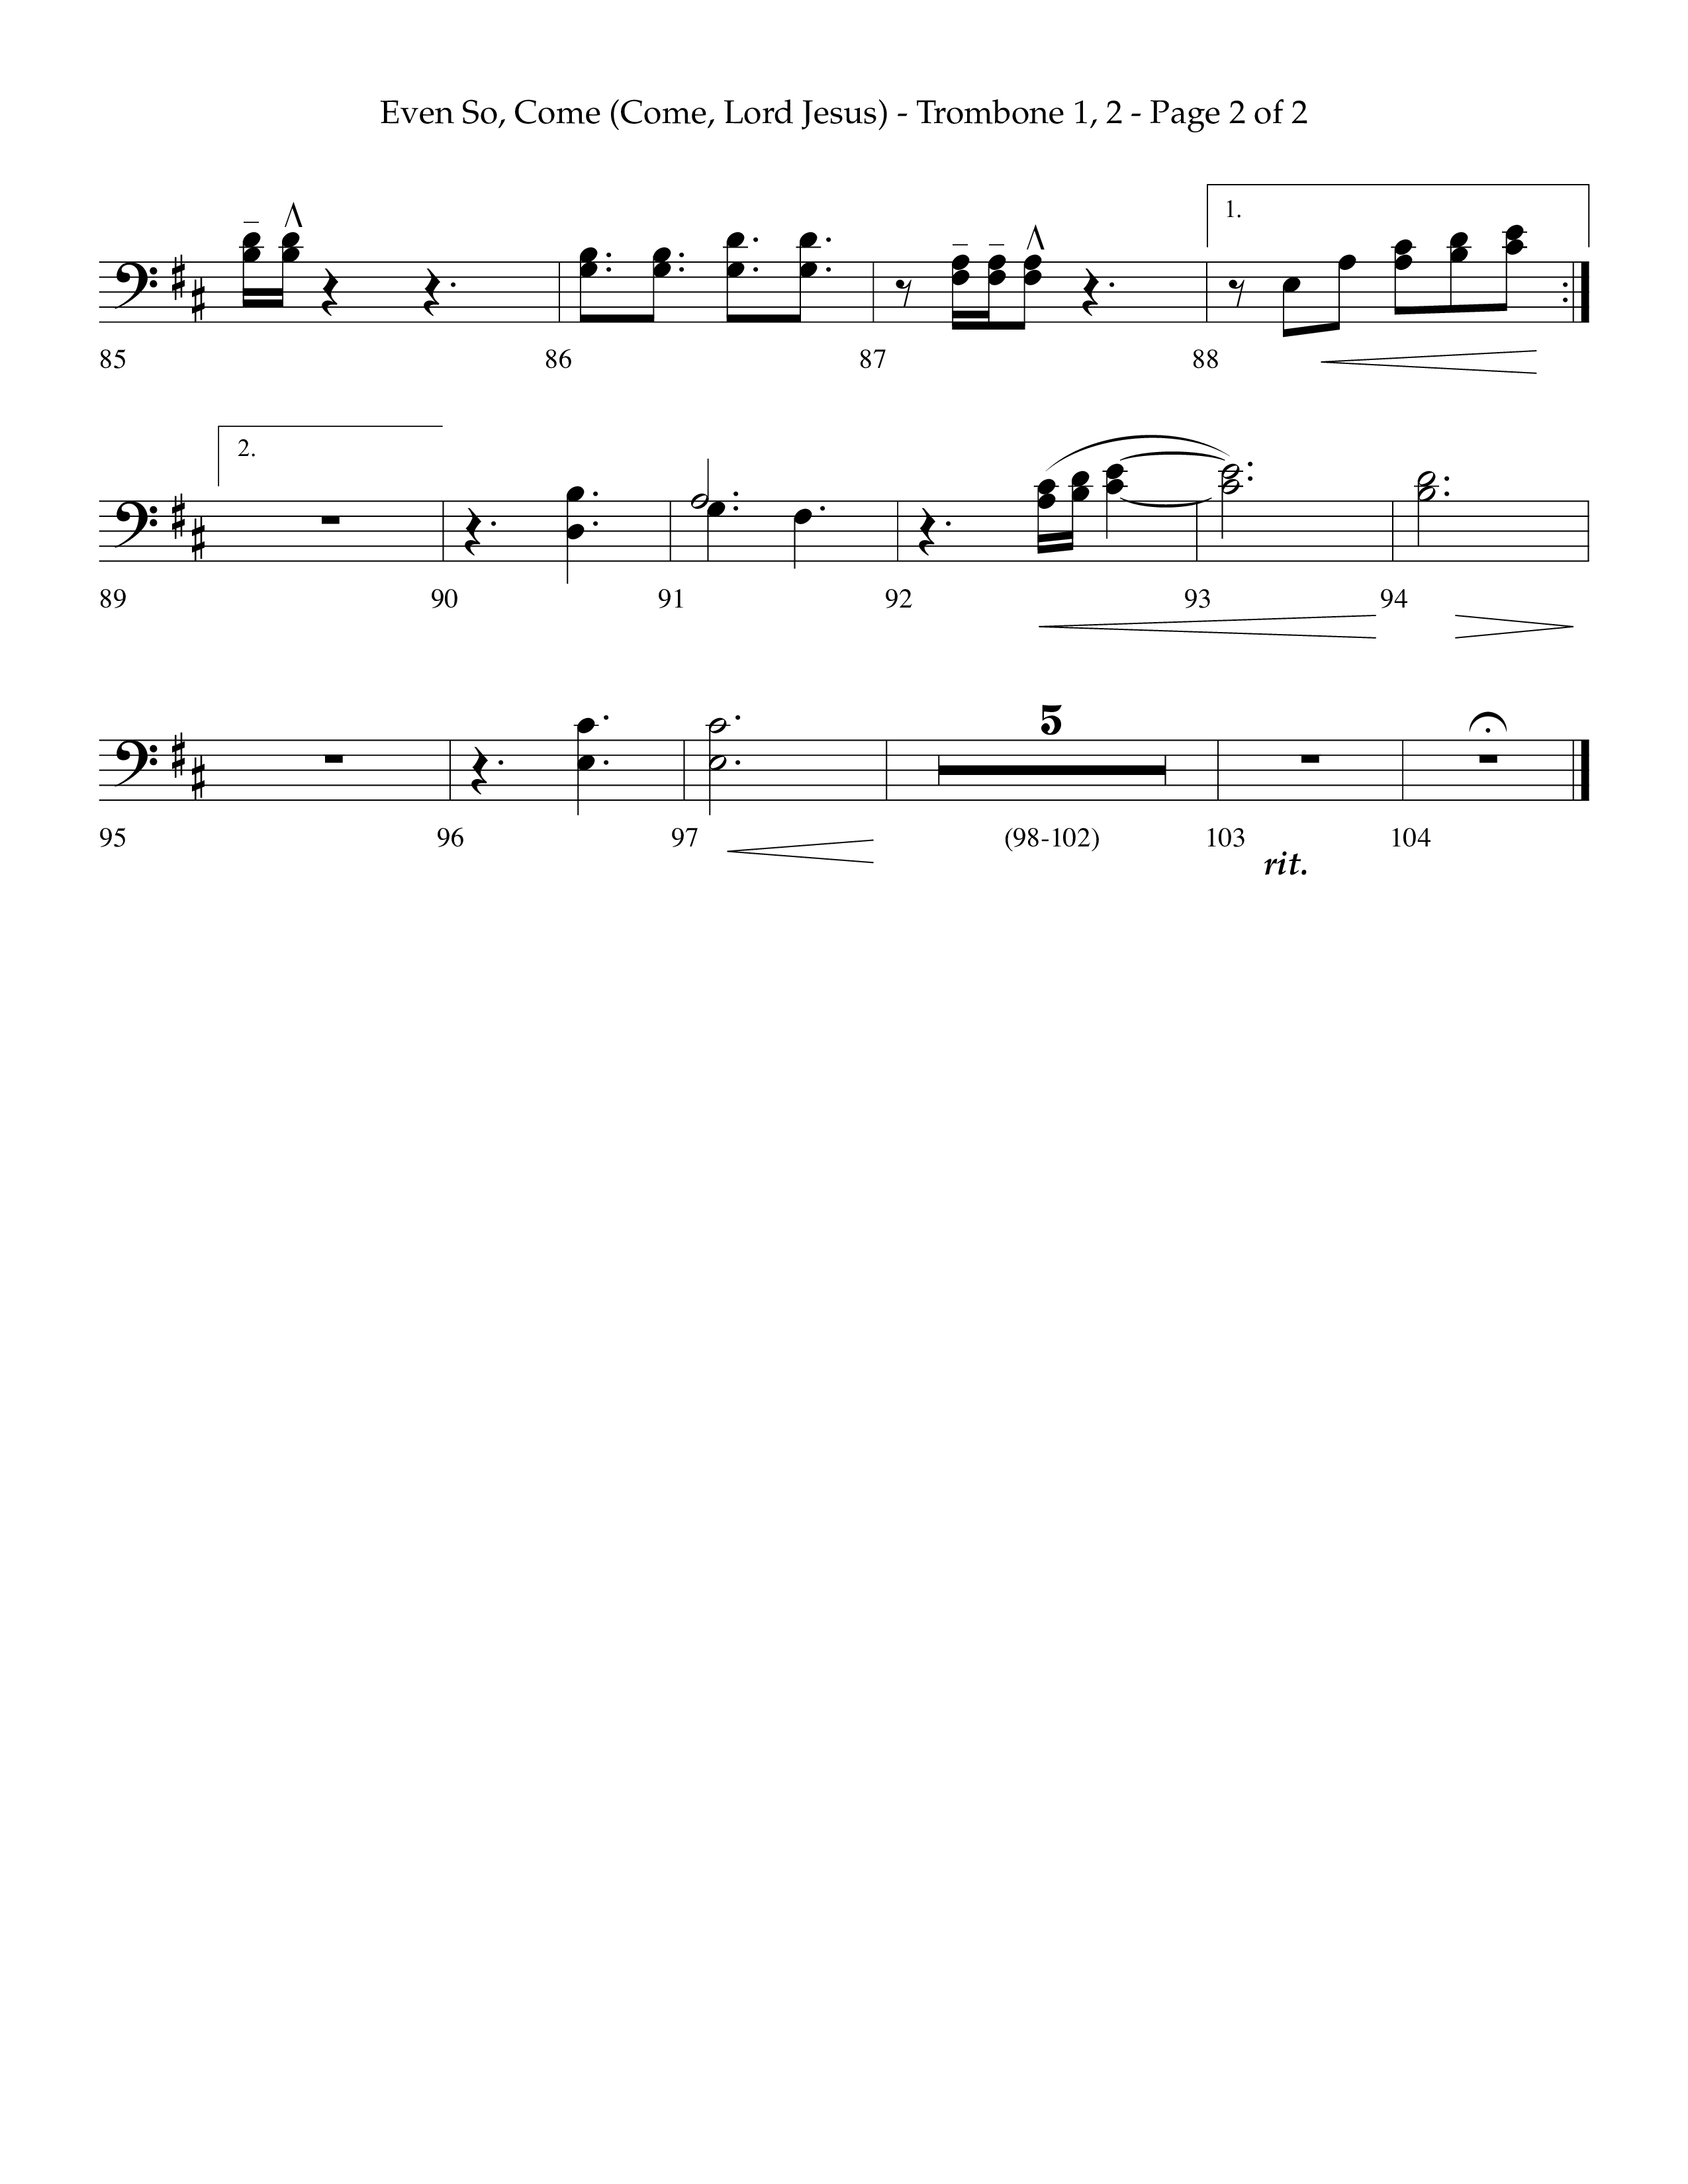 Even So Come (Choral Anthem SATB) Trombone 1/2 (Lifeway Choral / Arr. Camp Kirkland)